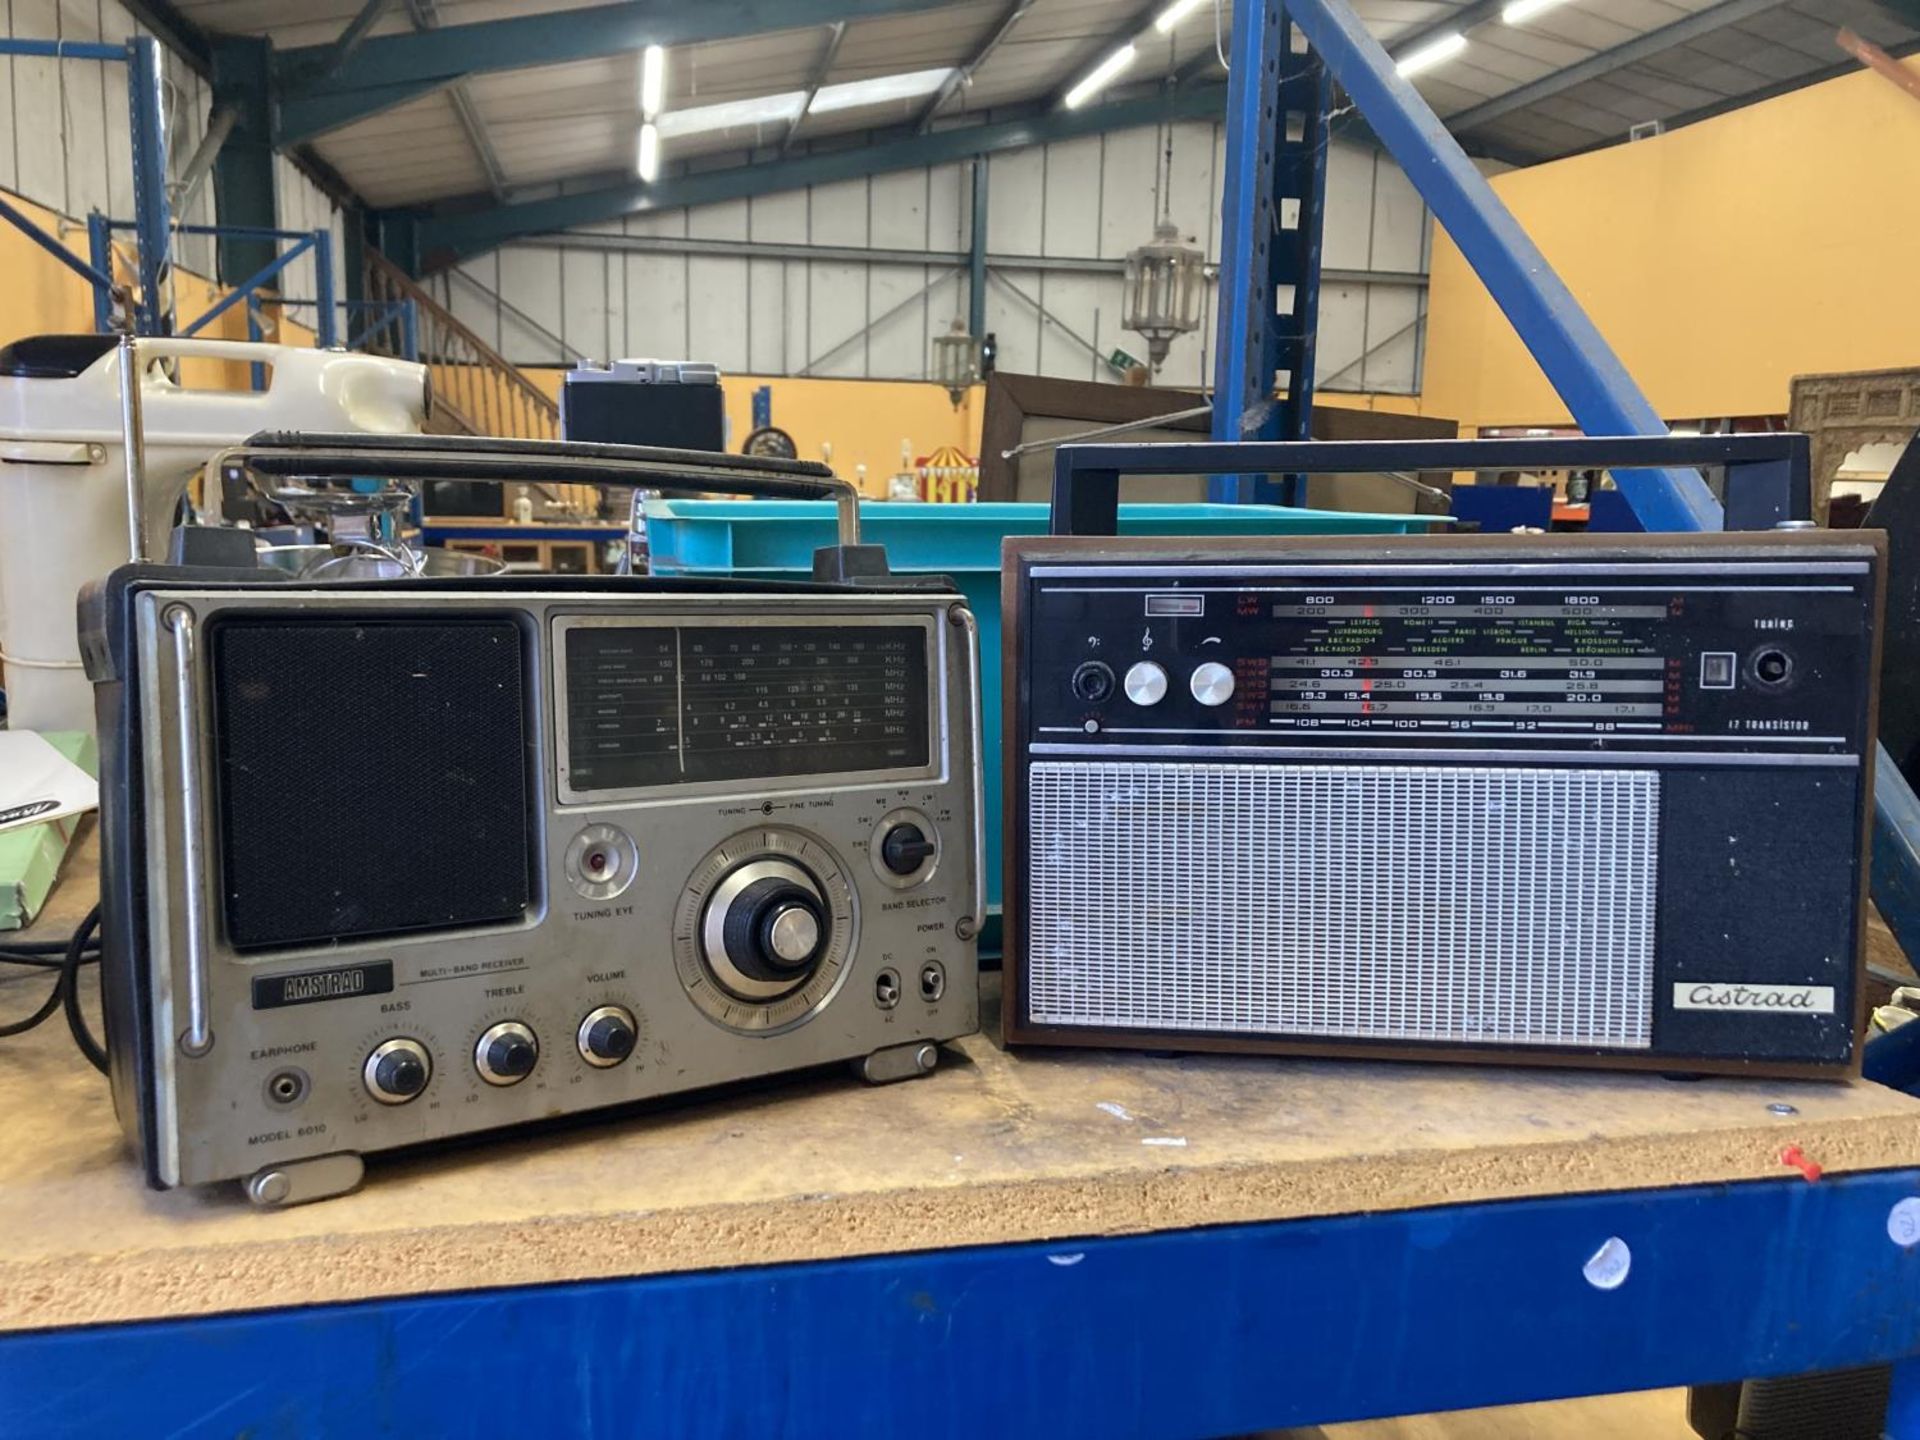 TWO VINTAGE AMSTRAD TRANSISTOR RADIOS CONSISTING OF MODEL6010 AND MODEL F8TR17B205